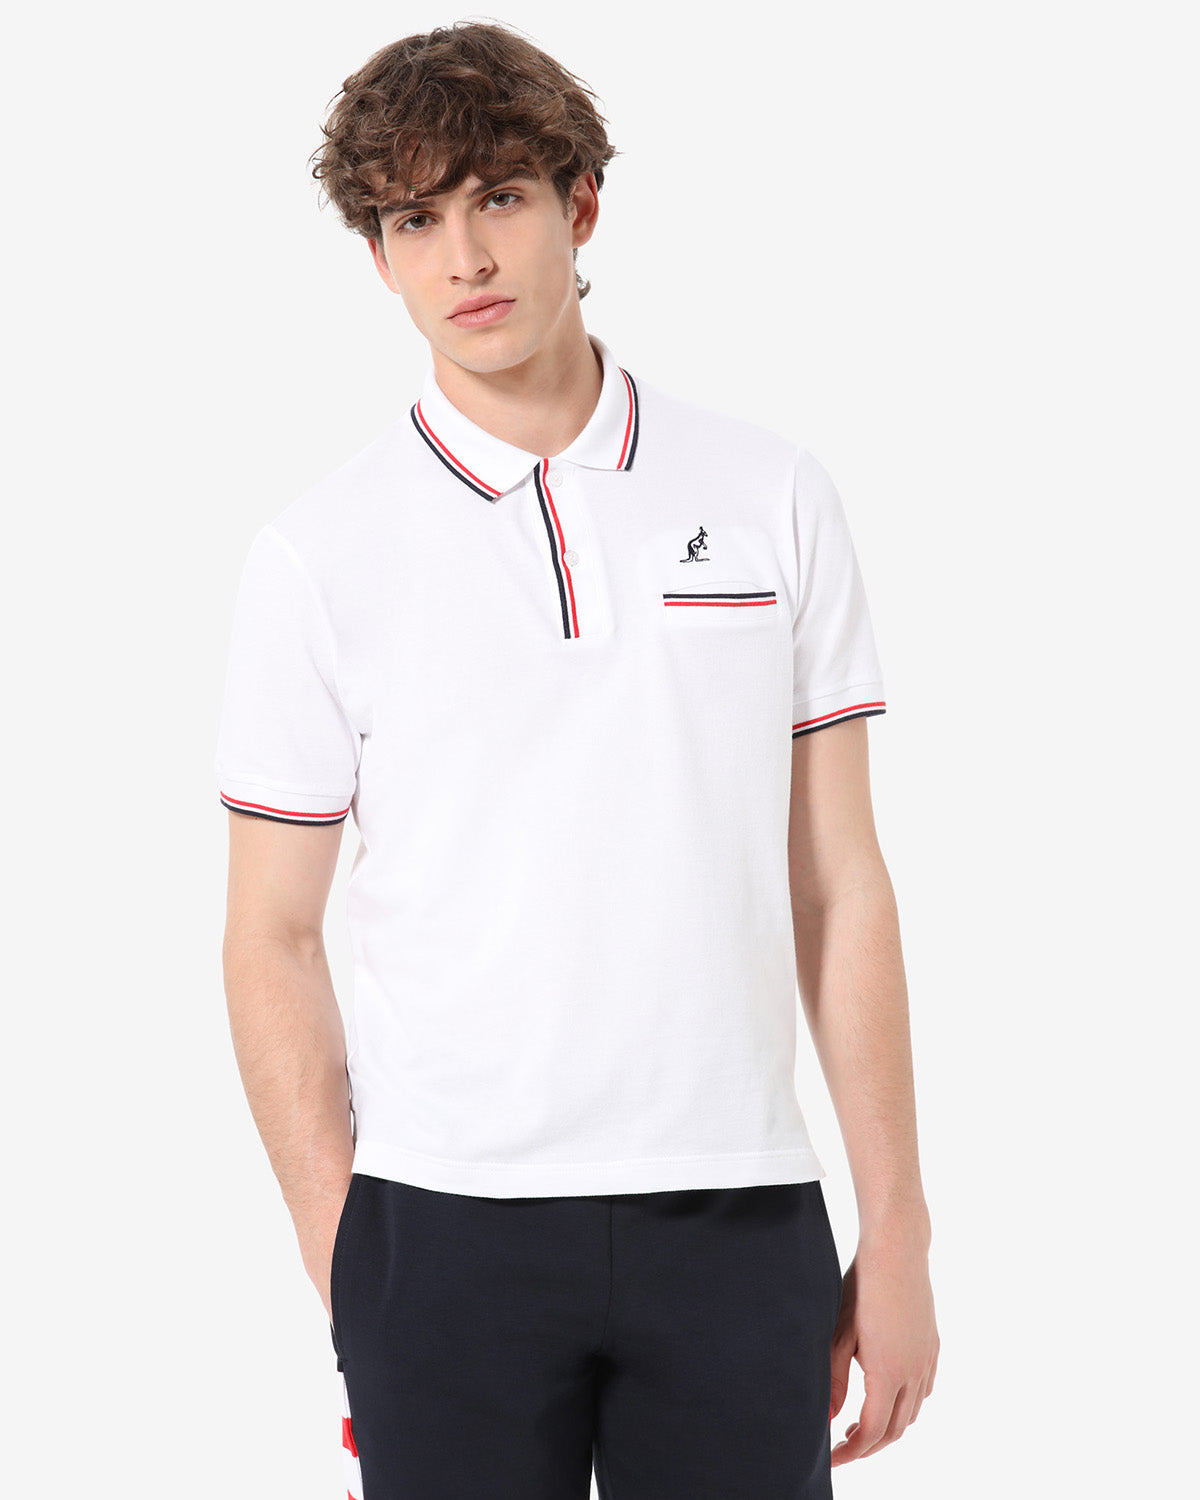 Pocket Pique Polo Shirt: Australian Sportswear